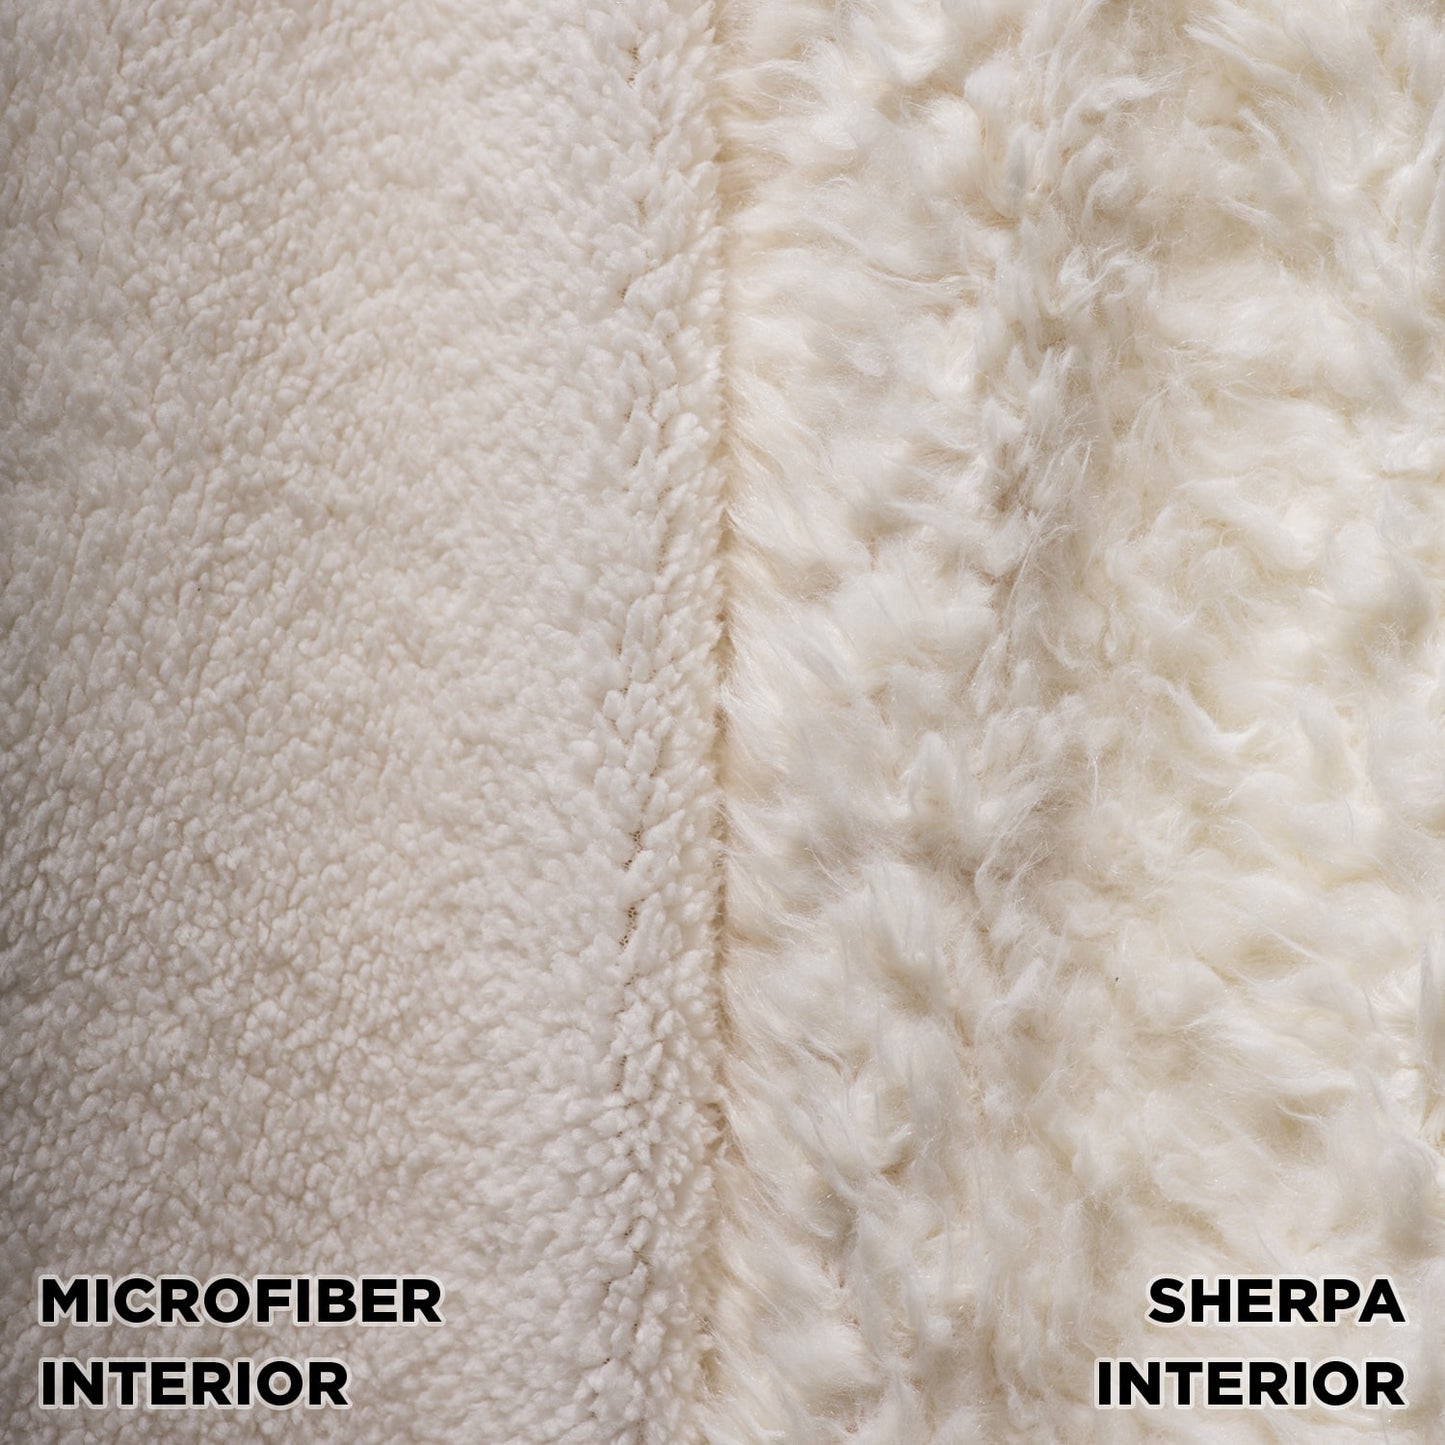 Comparison of microfiber and sherpa-style interior fabrics